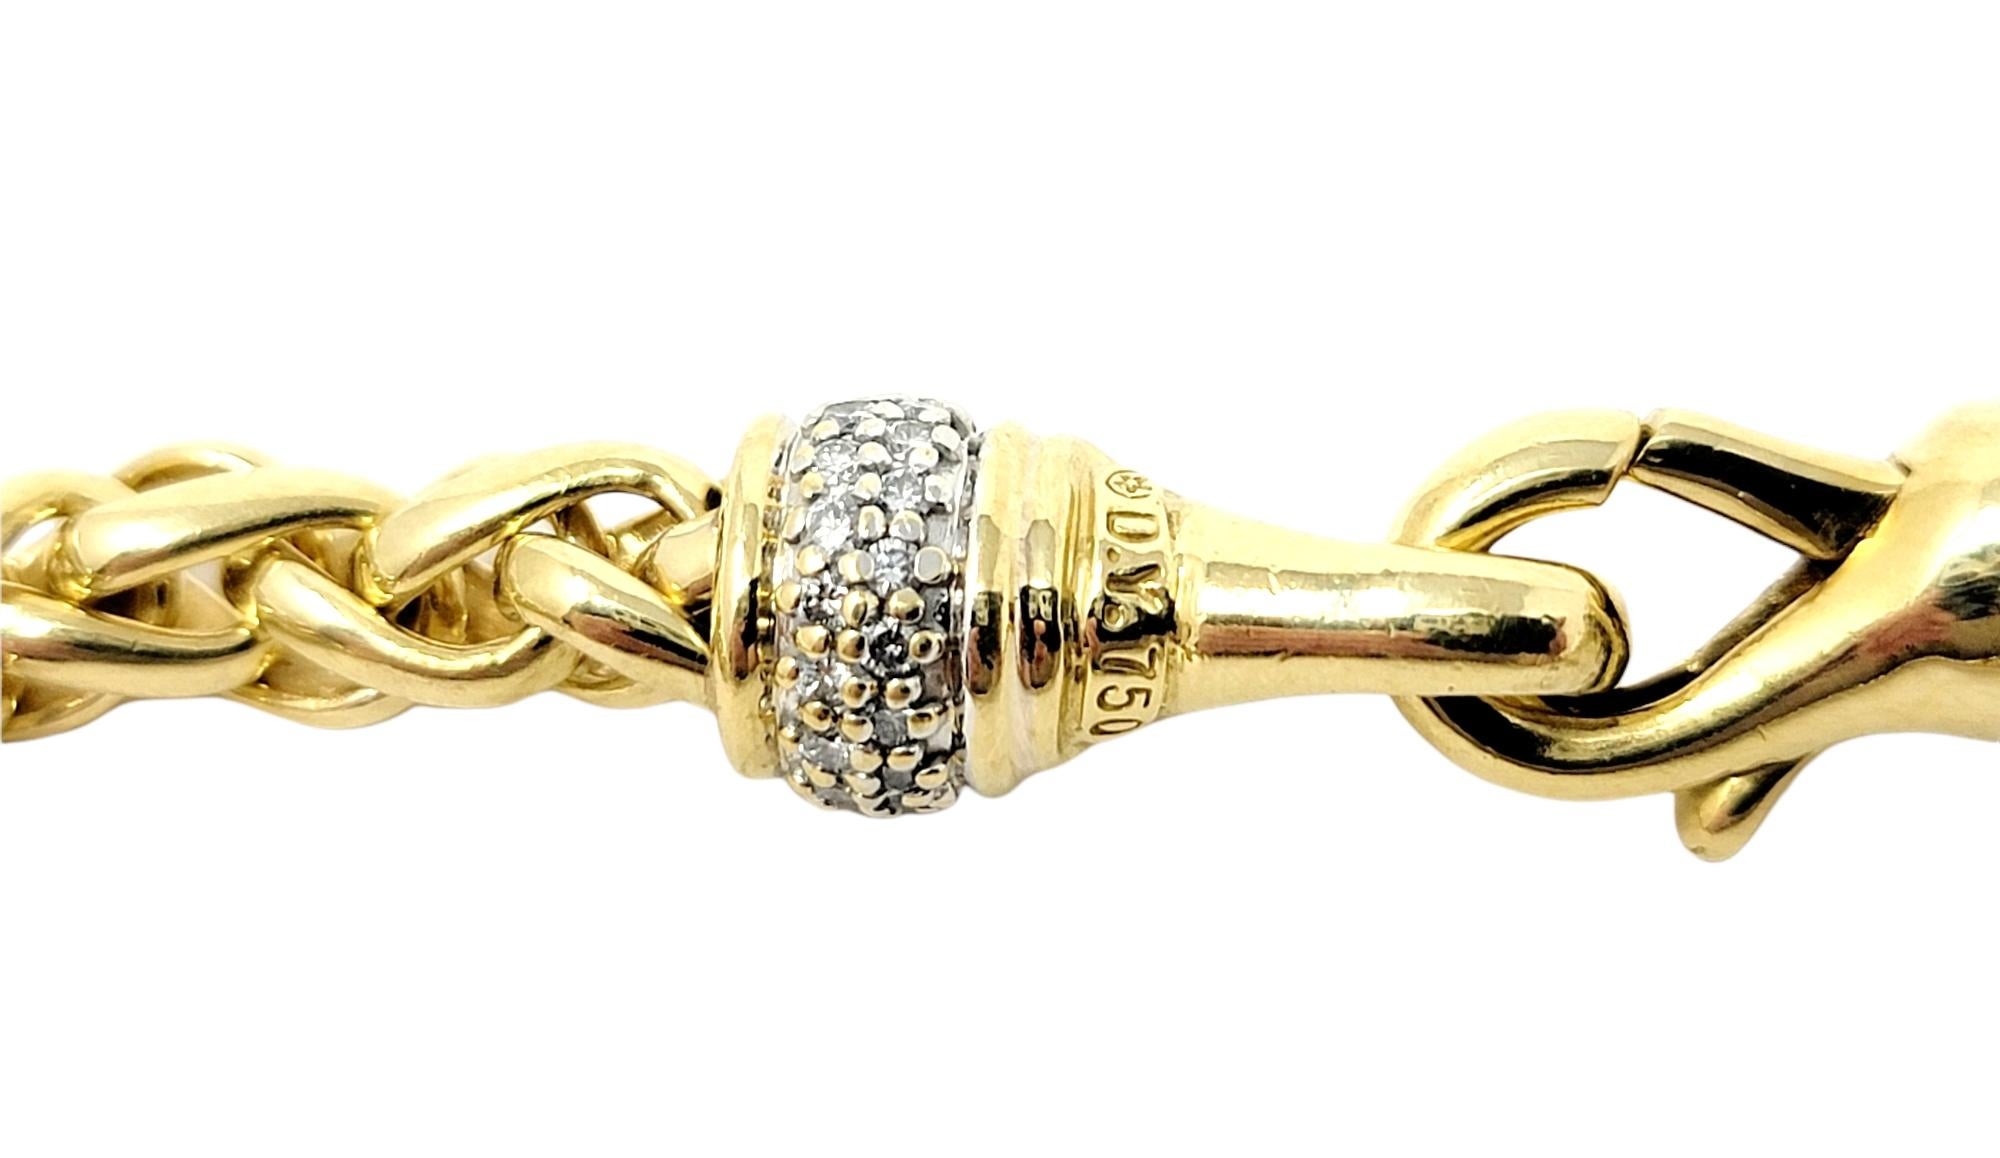 Women's David Yurman 18 Karat Yellow Gold Wheat Chain Link Necklace with Diamond Accents